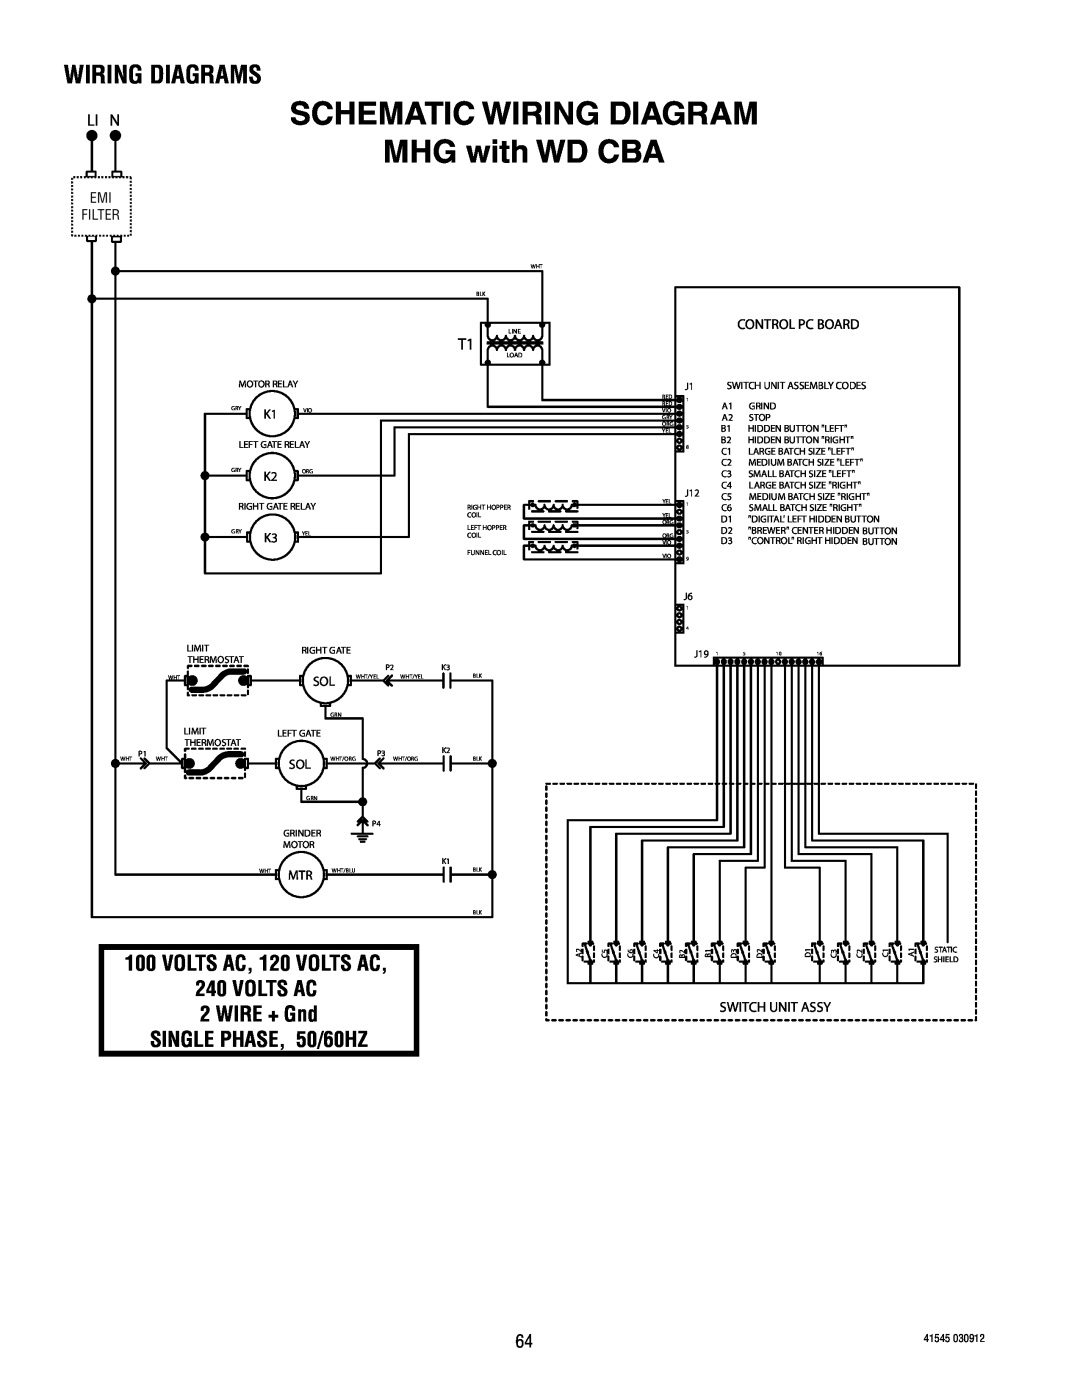 Bunn LPG-2, G9 SCHEMATIC WIRING DIAGRAM MHG with WD CBA, Wiring Diagrams, VOLTS AC, 120 VOLTS AC 240 VOLTS AC 2 WIRE + Gnd 